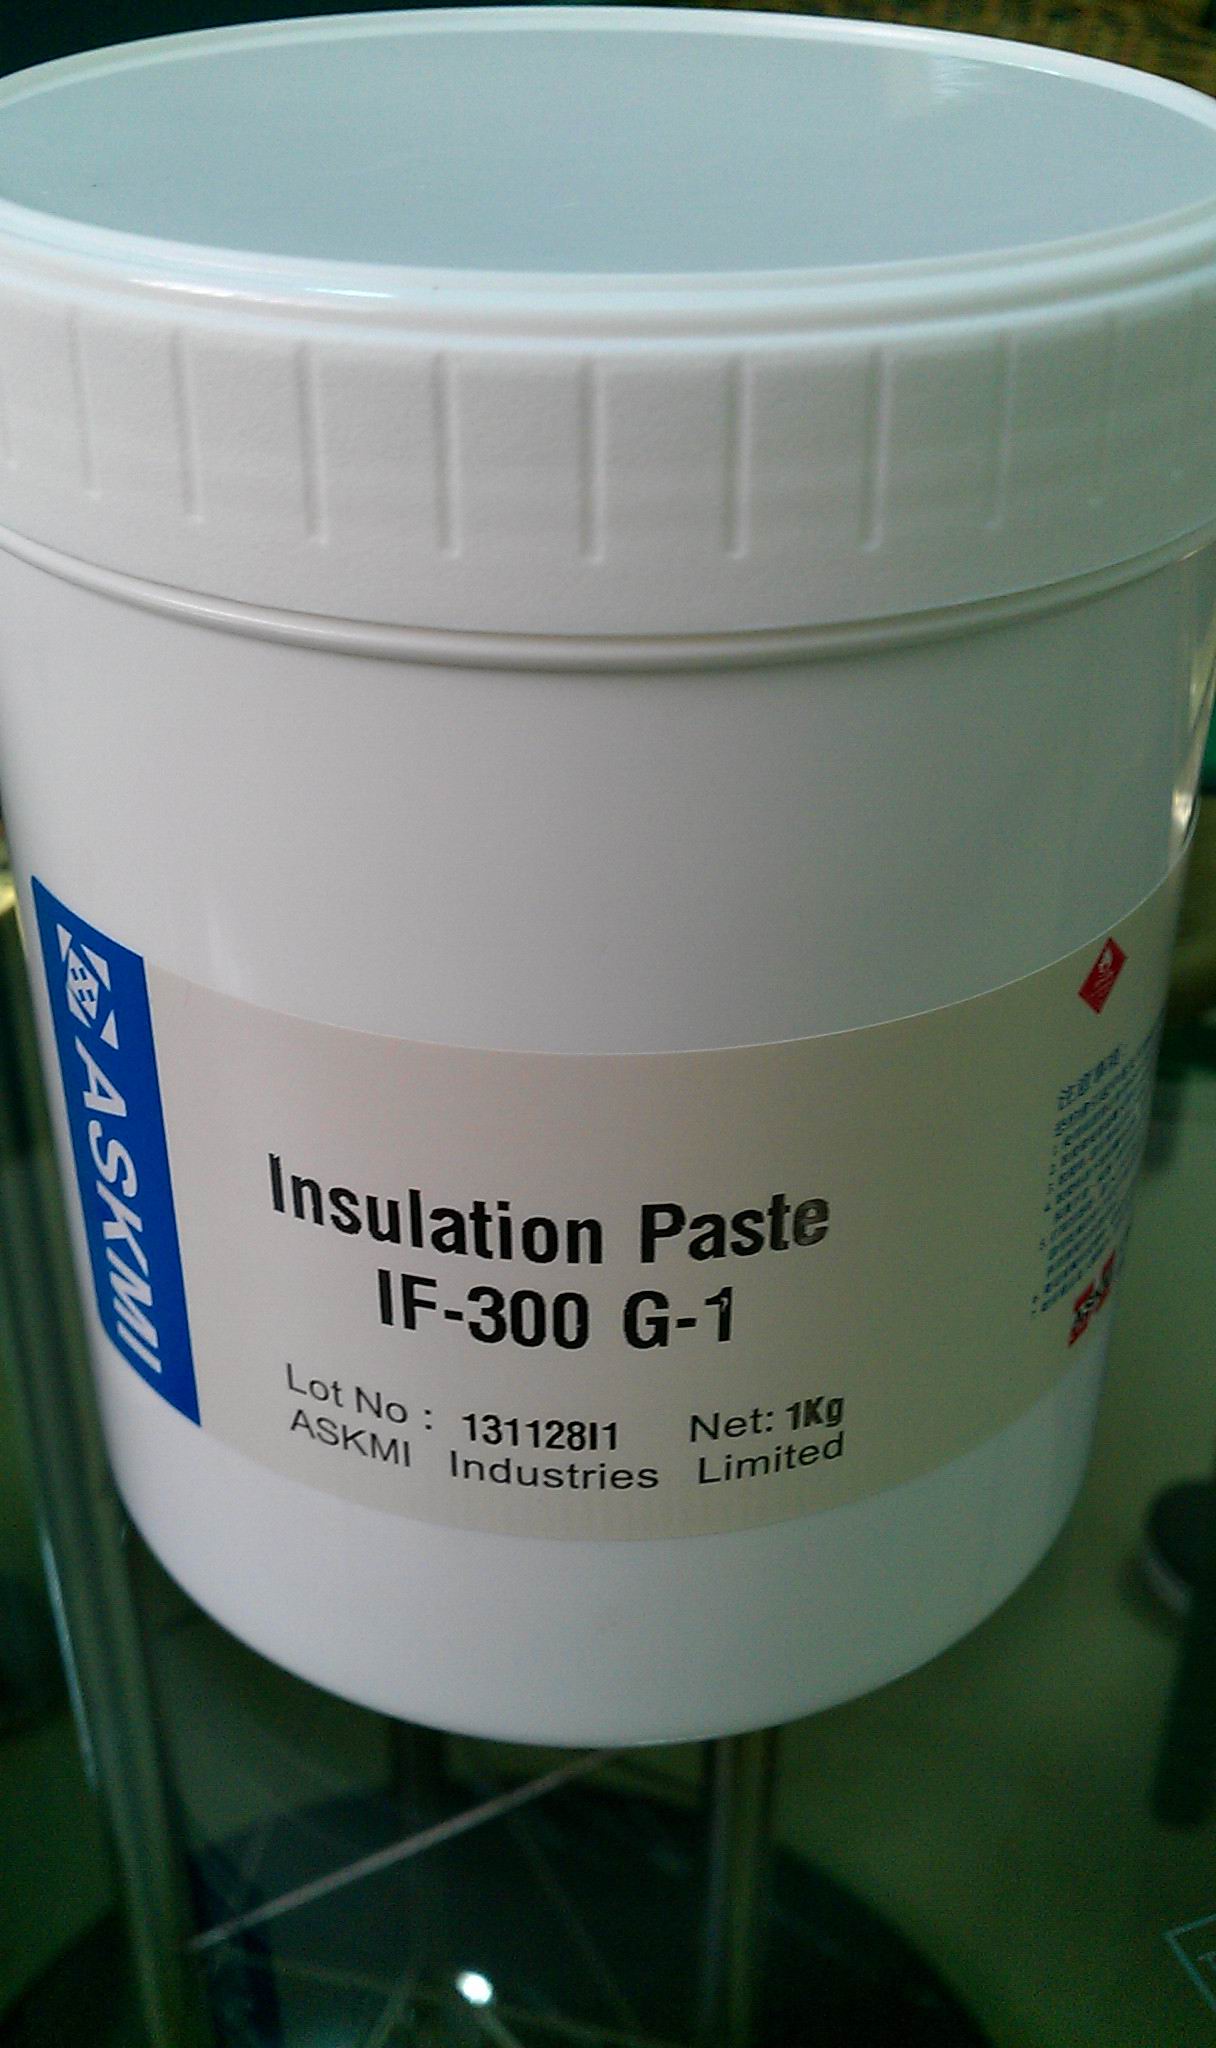 Insulation paste 熱固絕緣膠